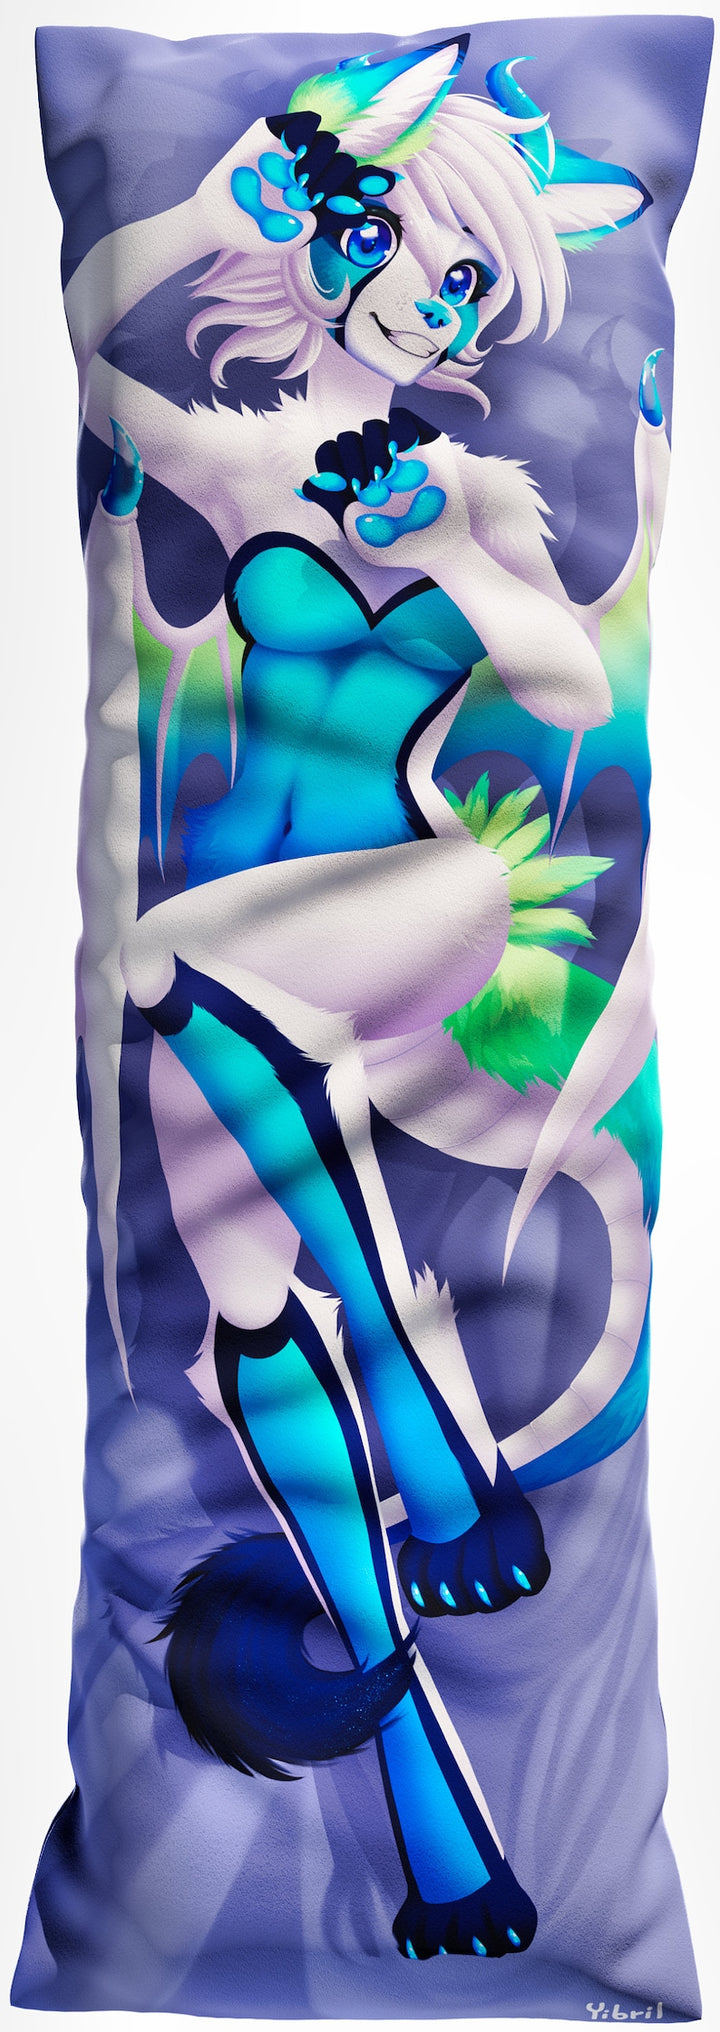 Daki Nithe - Art by BronwnieLoco - The White Dragon Dakimakura Furry Body Pillow Cover